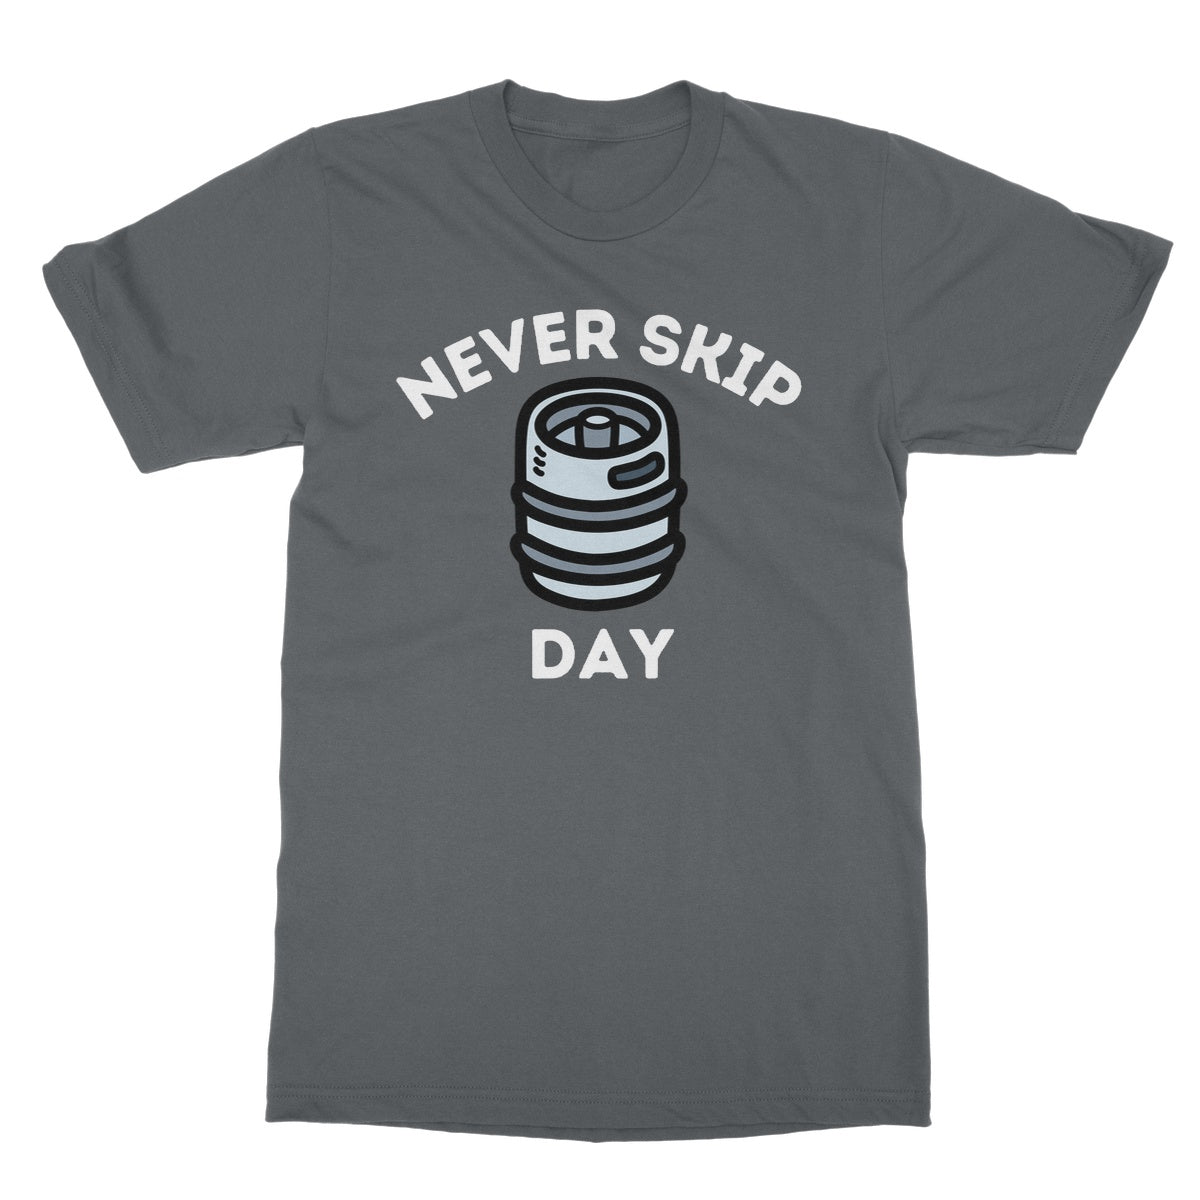 never skip keg day t shirt grey